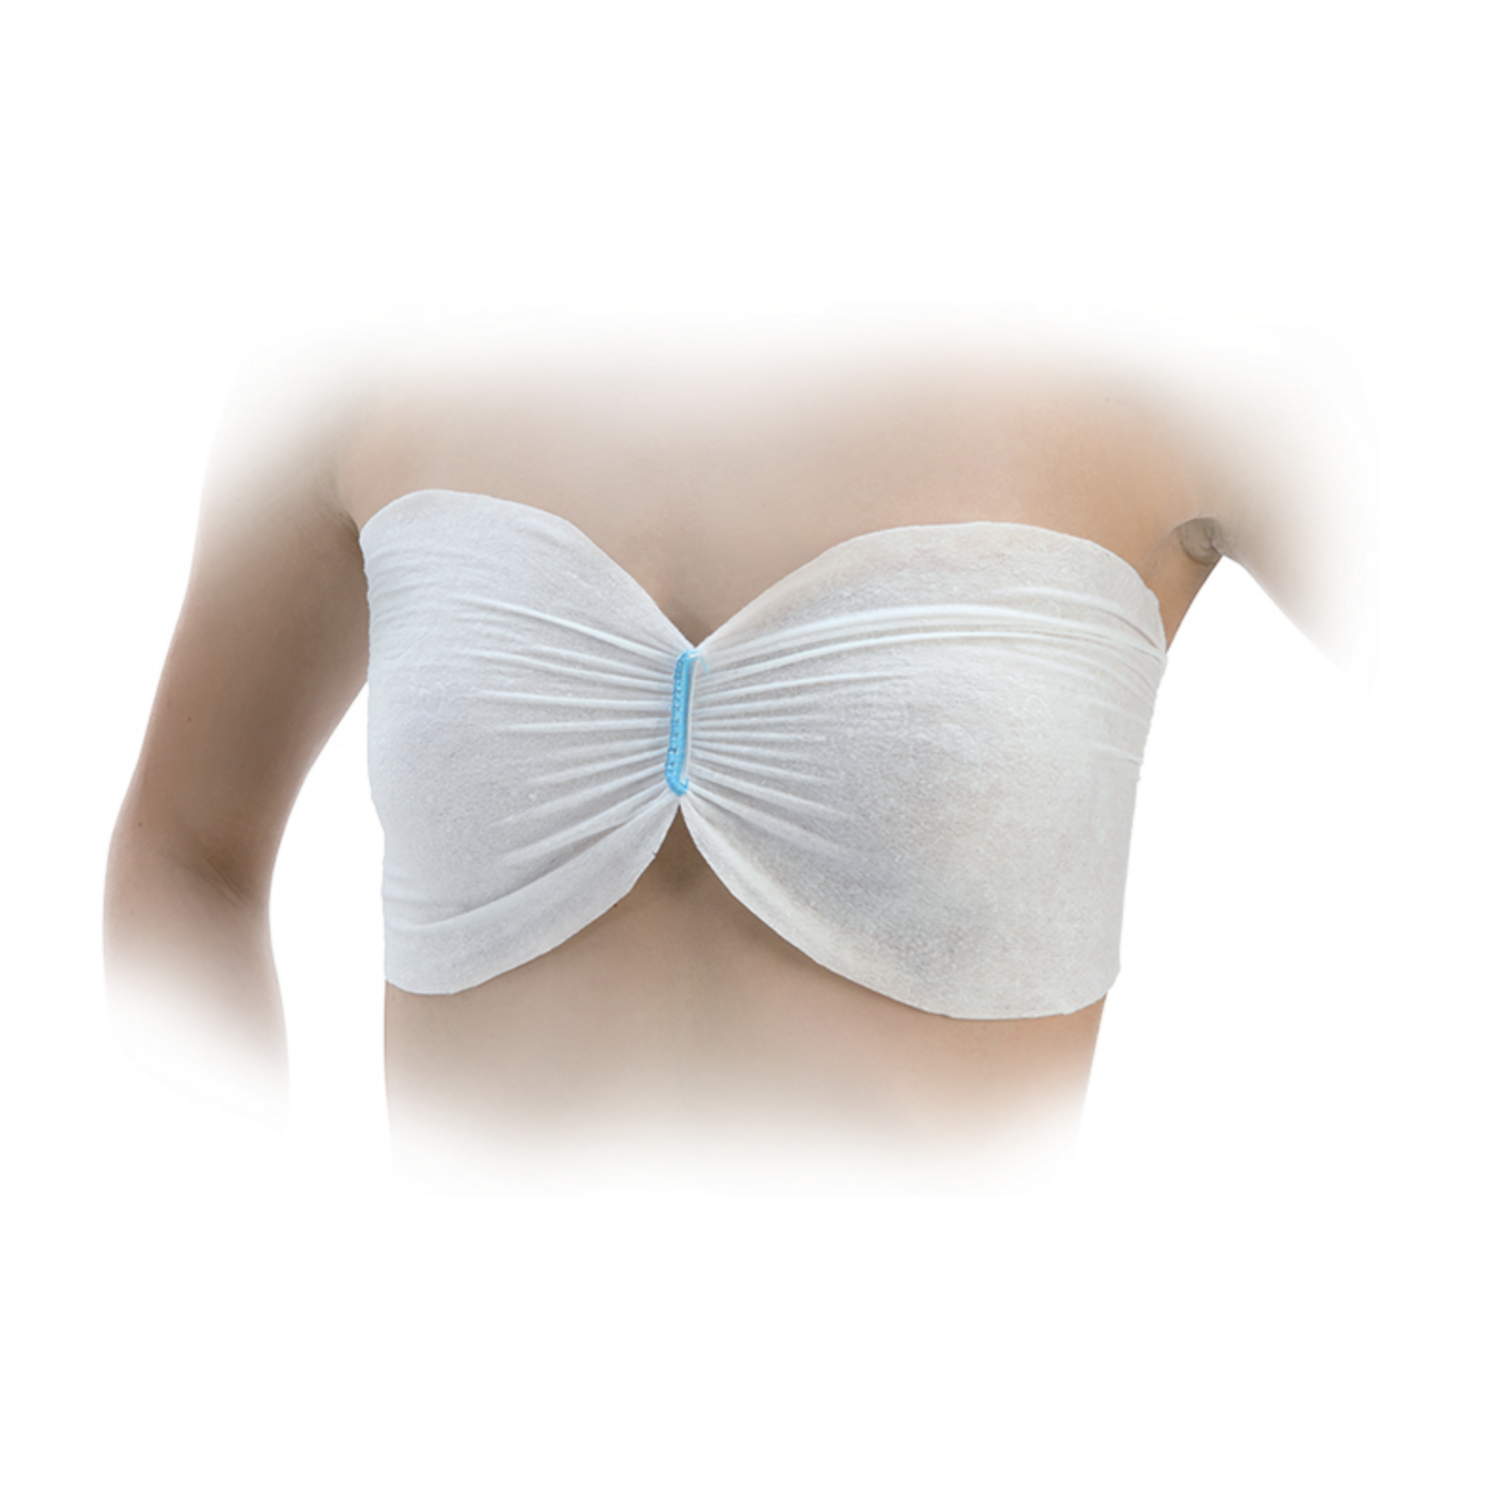 BLUE FARM | 500 Disposable sontlace bra